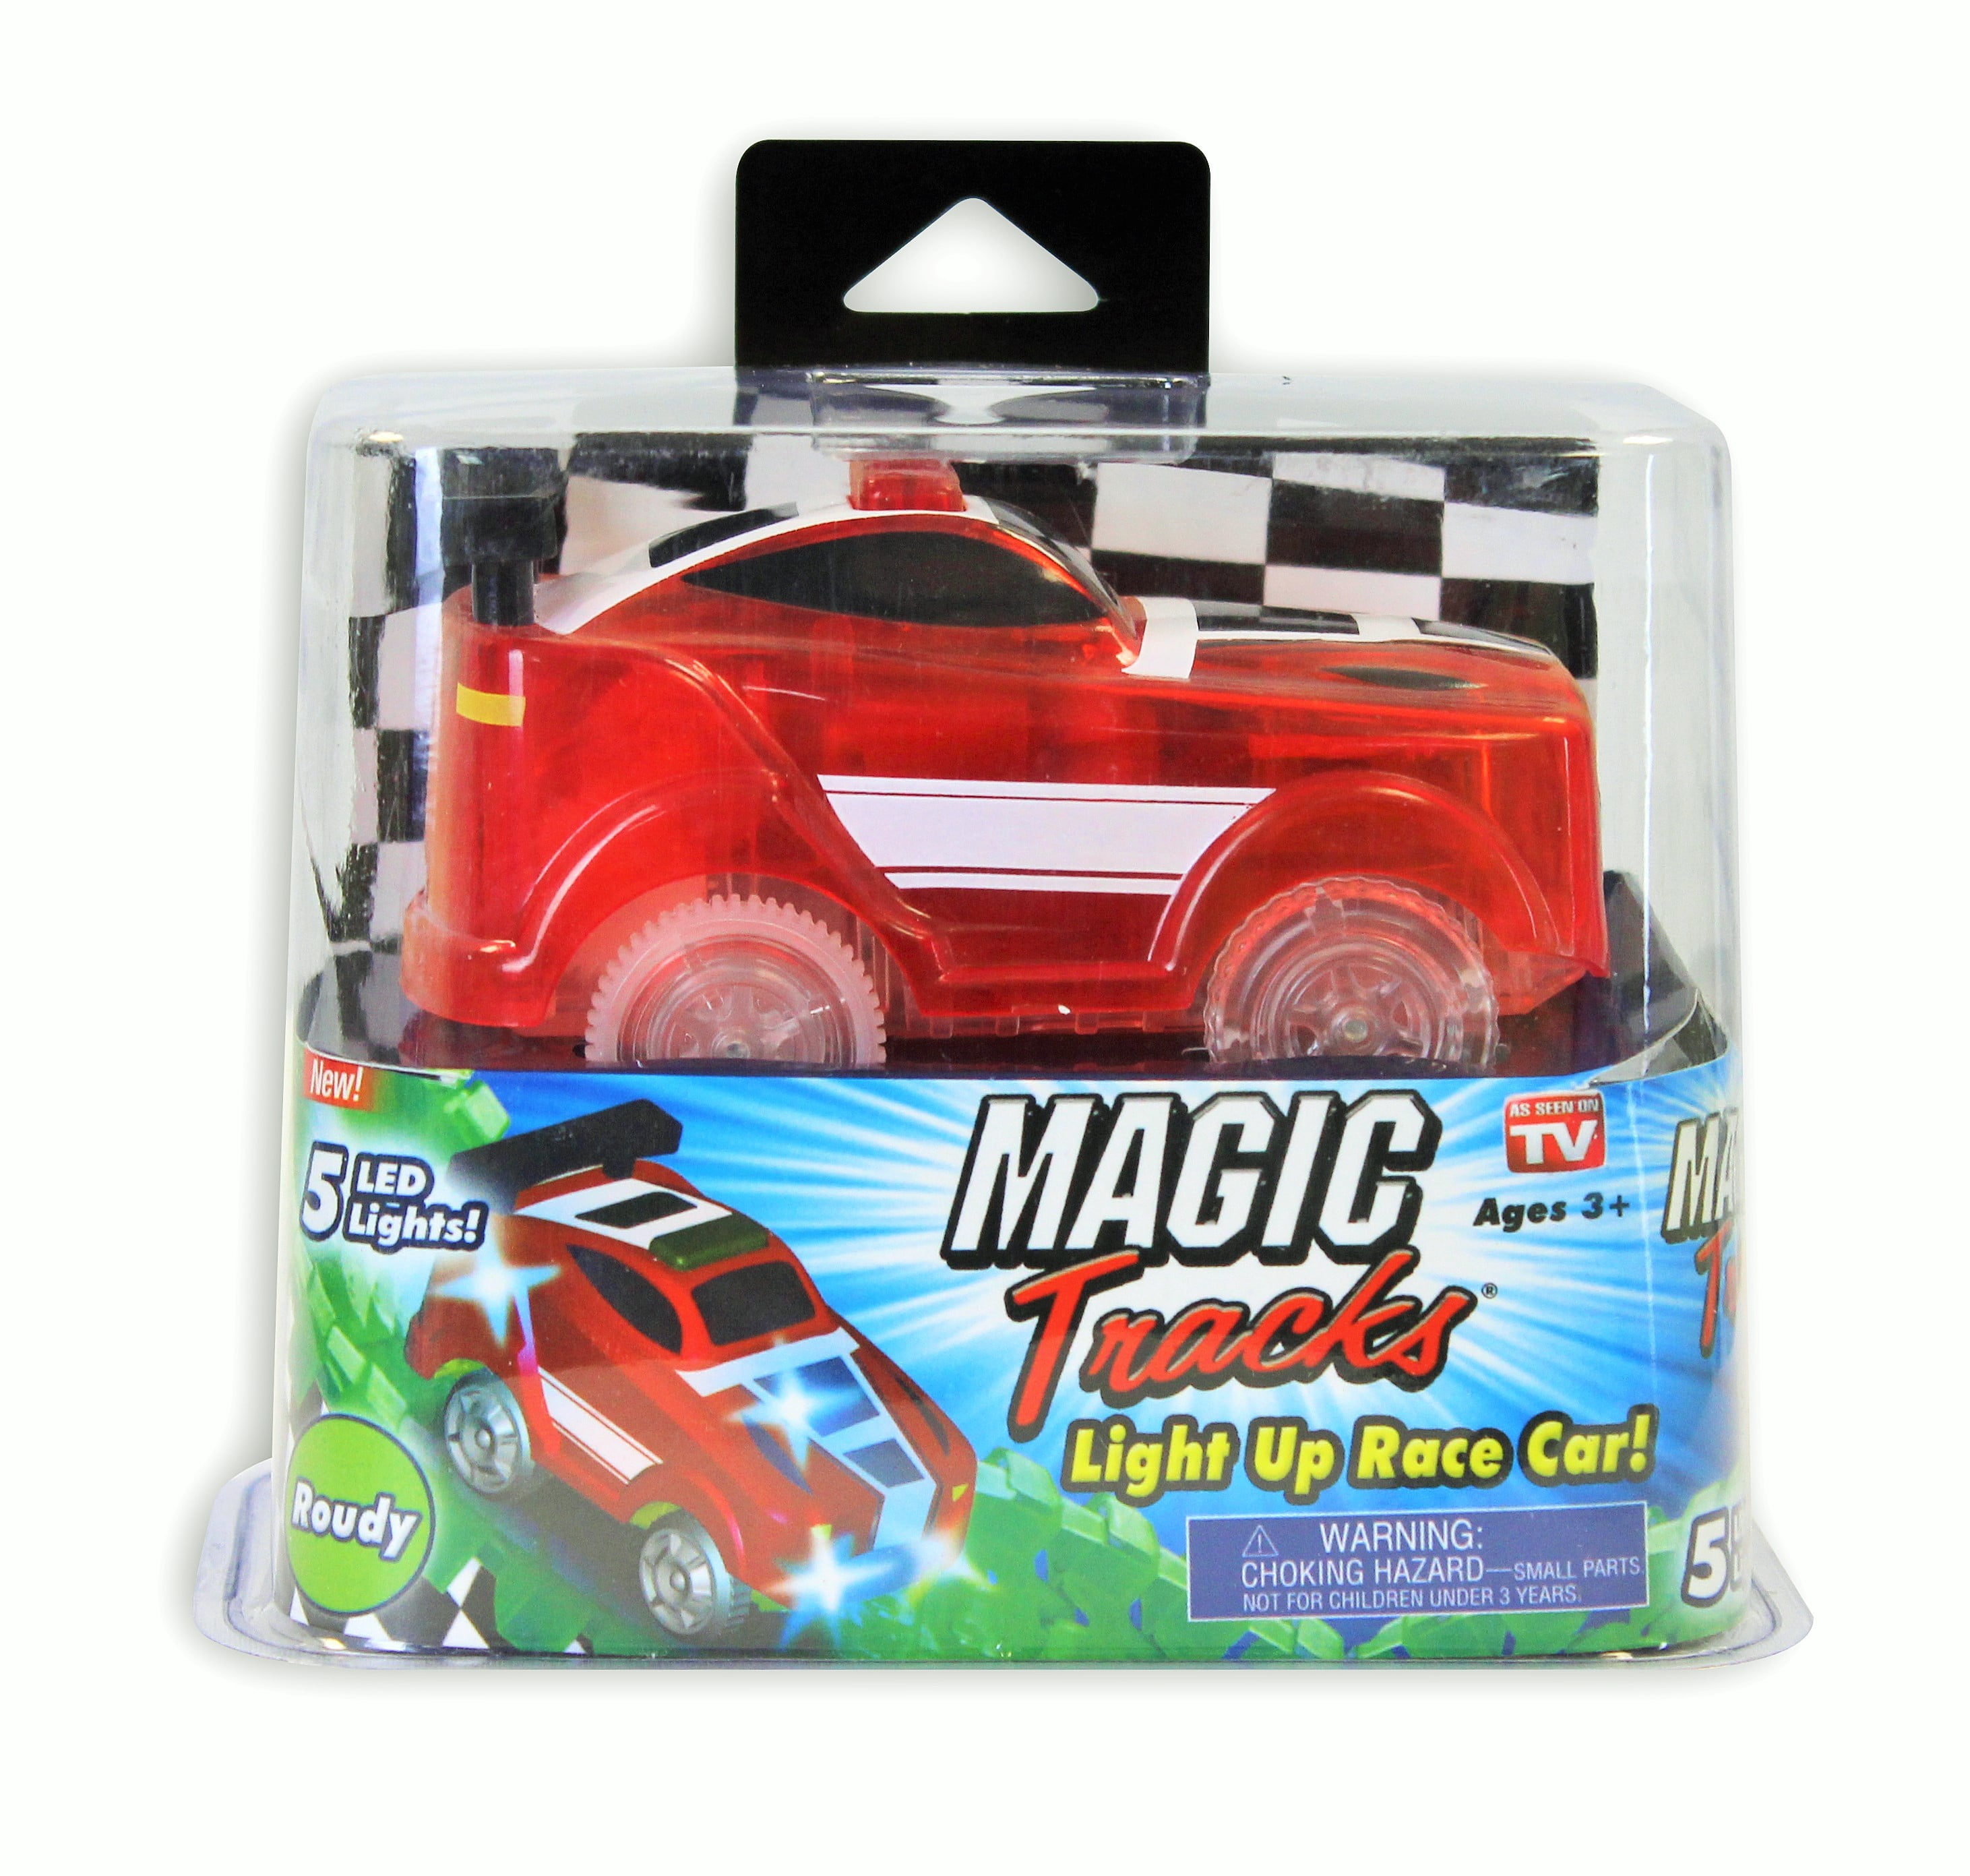 LED light up Cars for Magic-Tracks Kids Toys car for Children Race Car Toy New